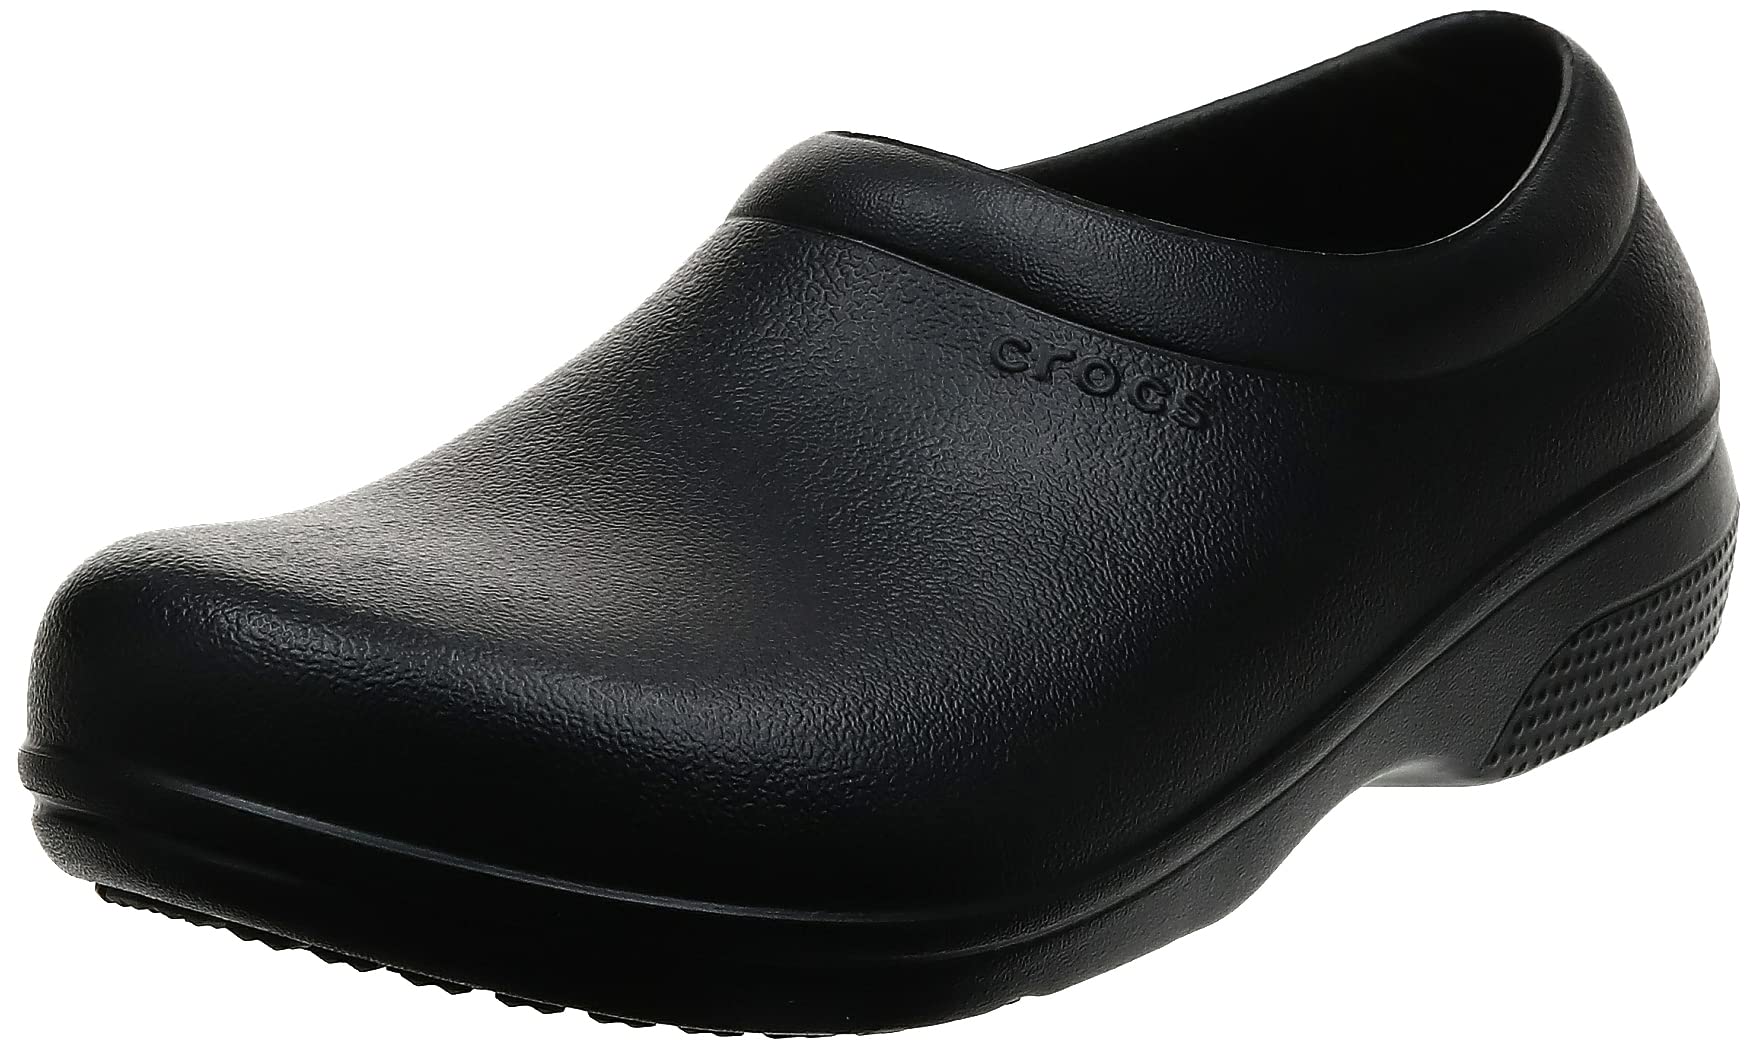 Crocs Unisex-Adult Men's and Women's on The Clock Clog | Slip Resistant Work Shoes